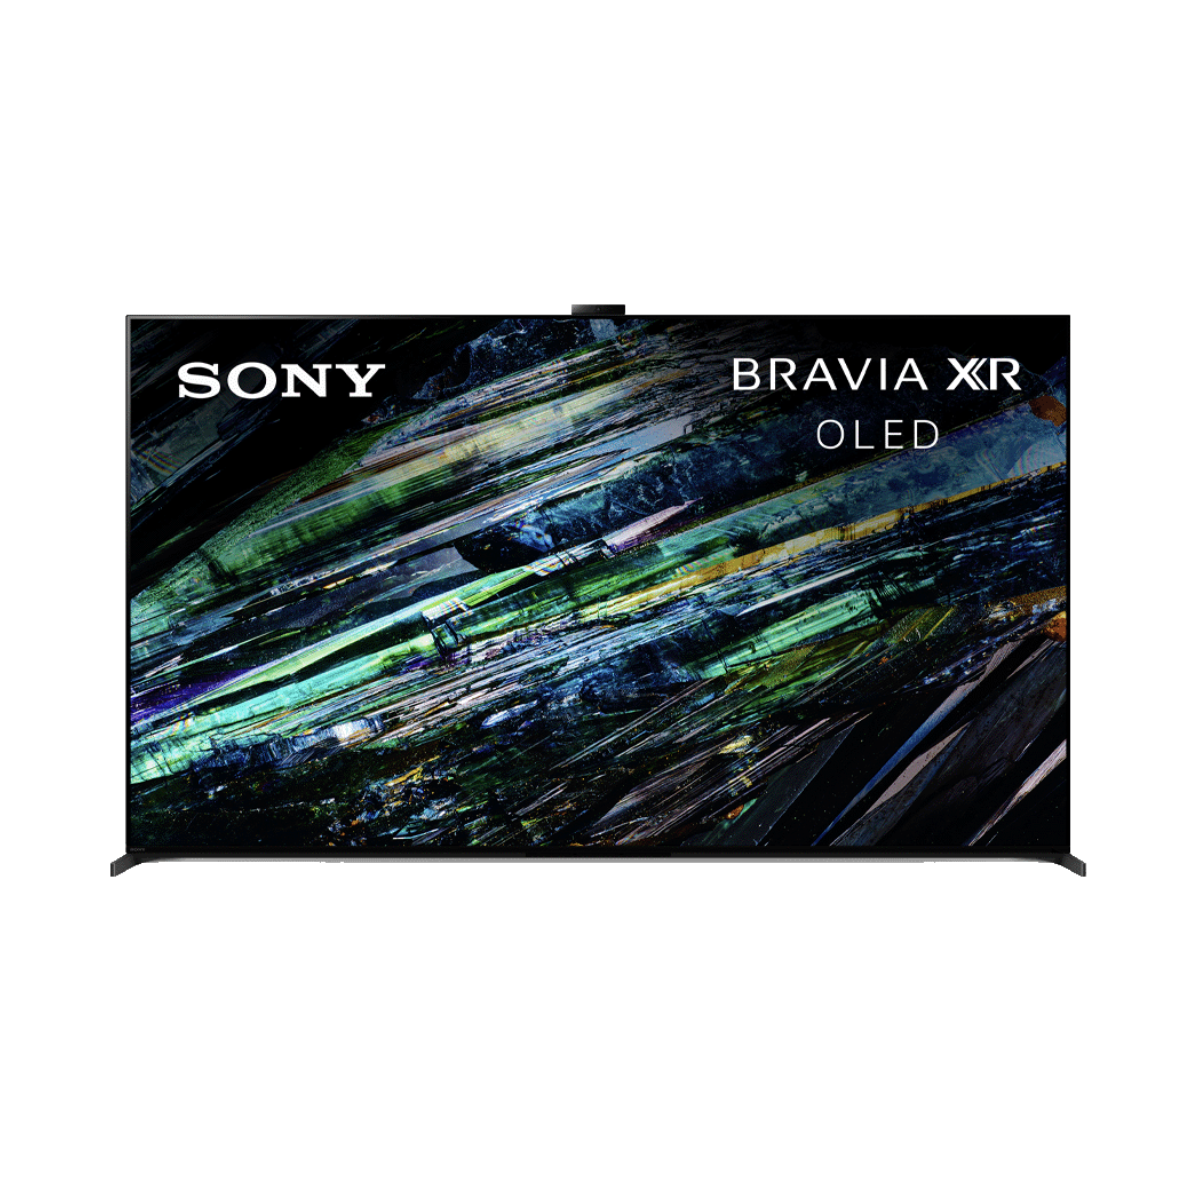 O Sony XR A95L de 65 polegadas